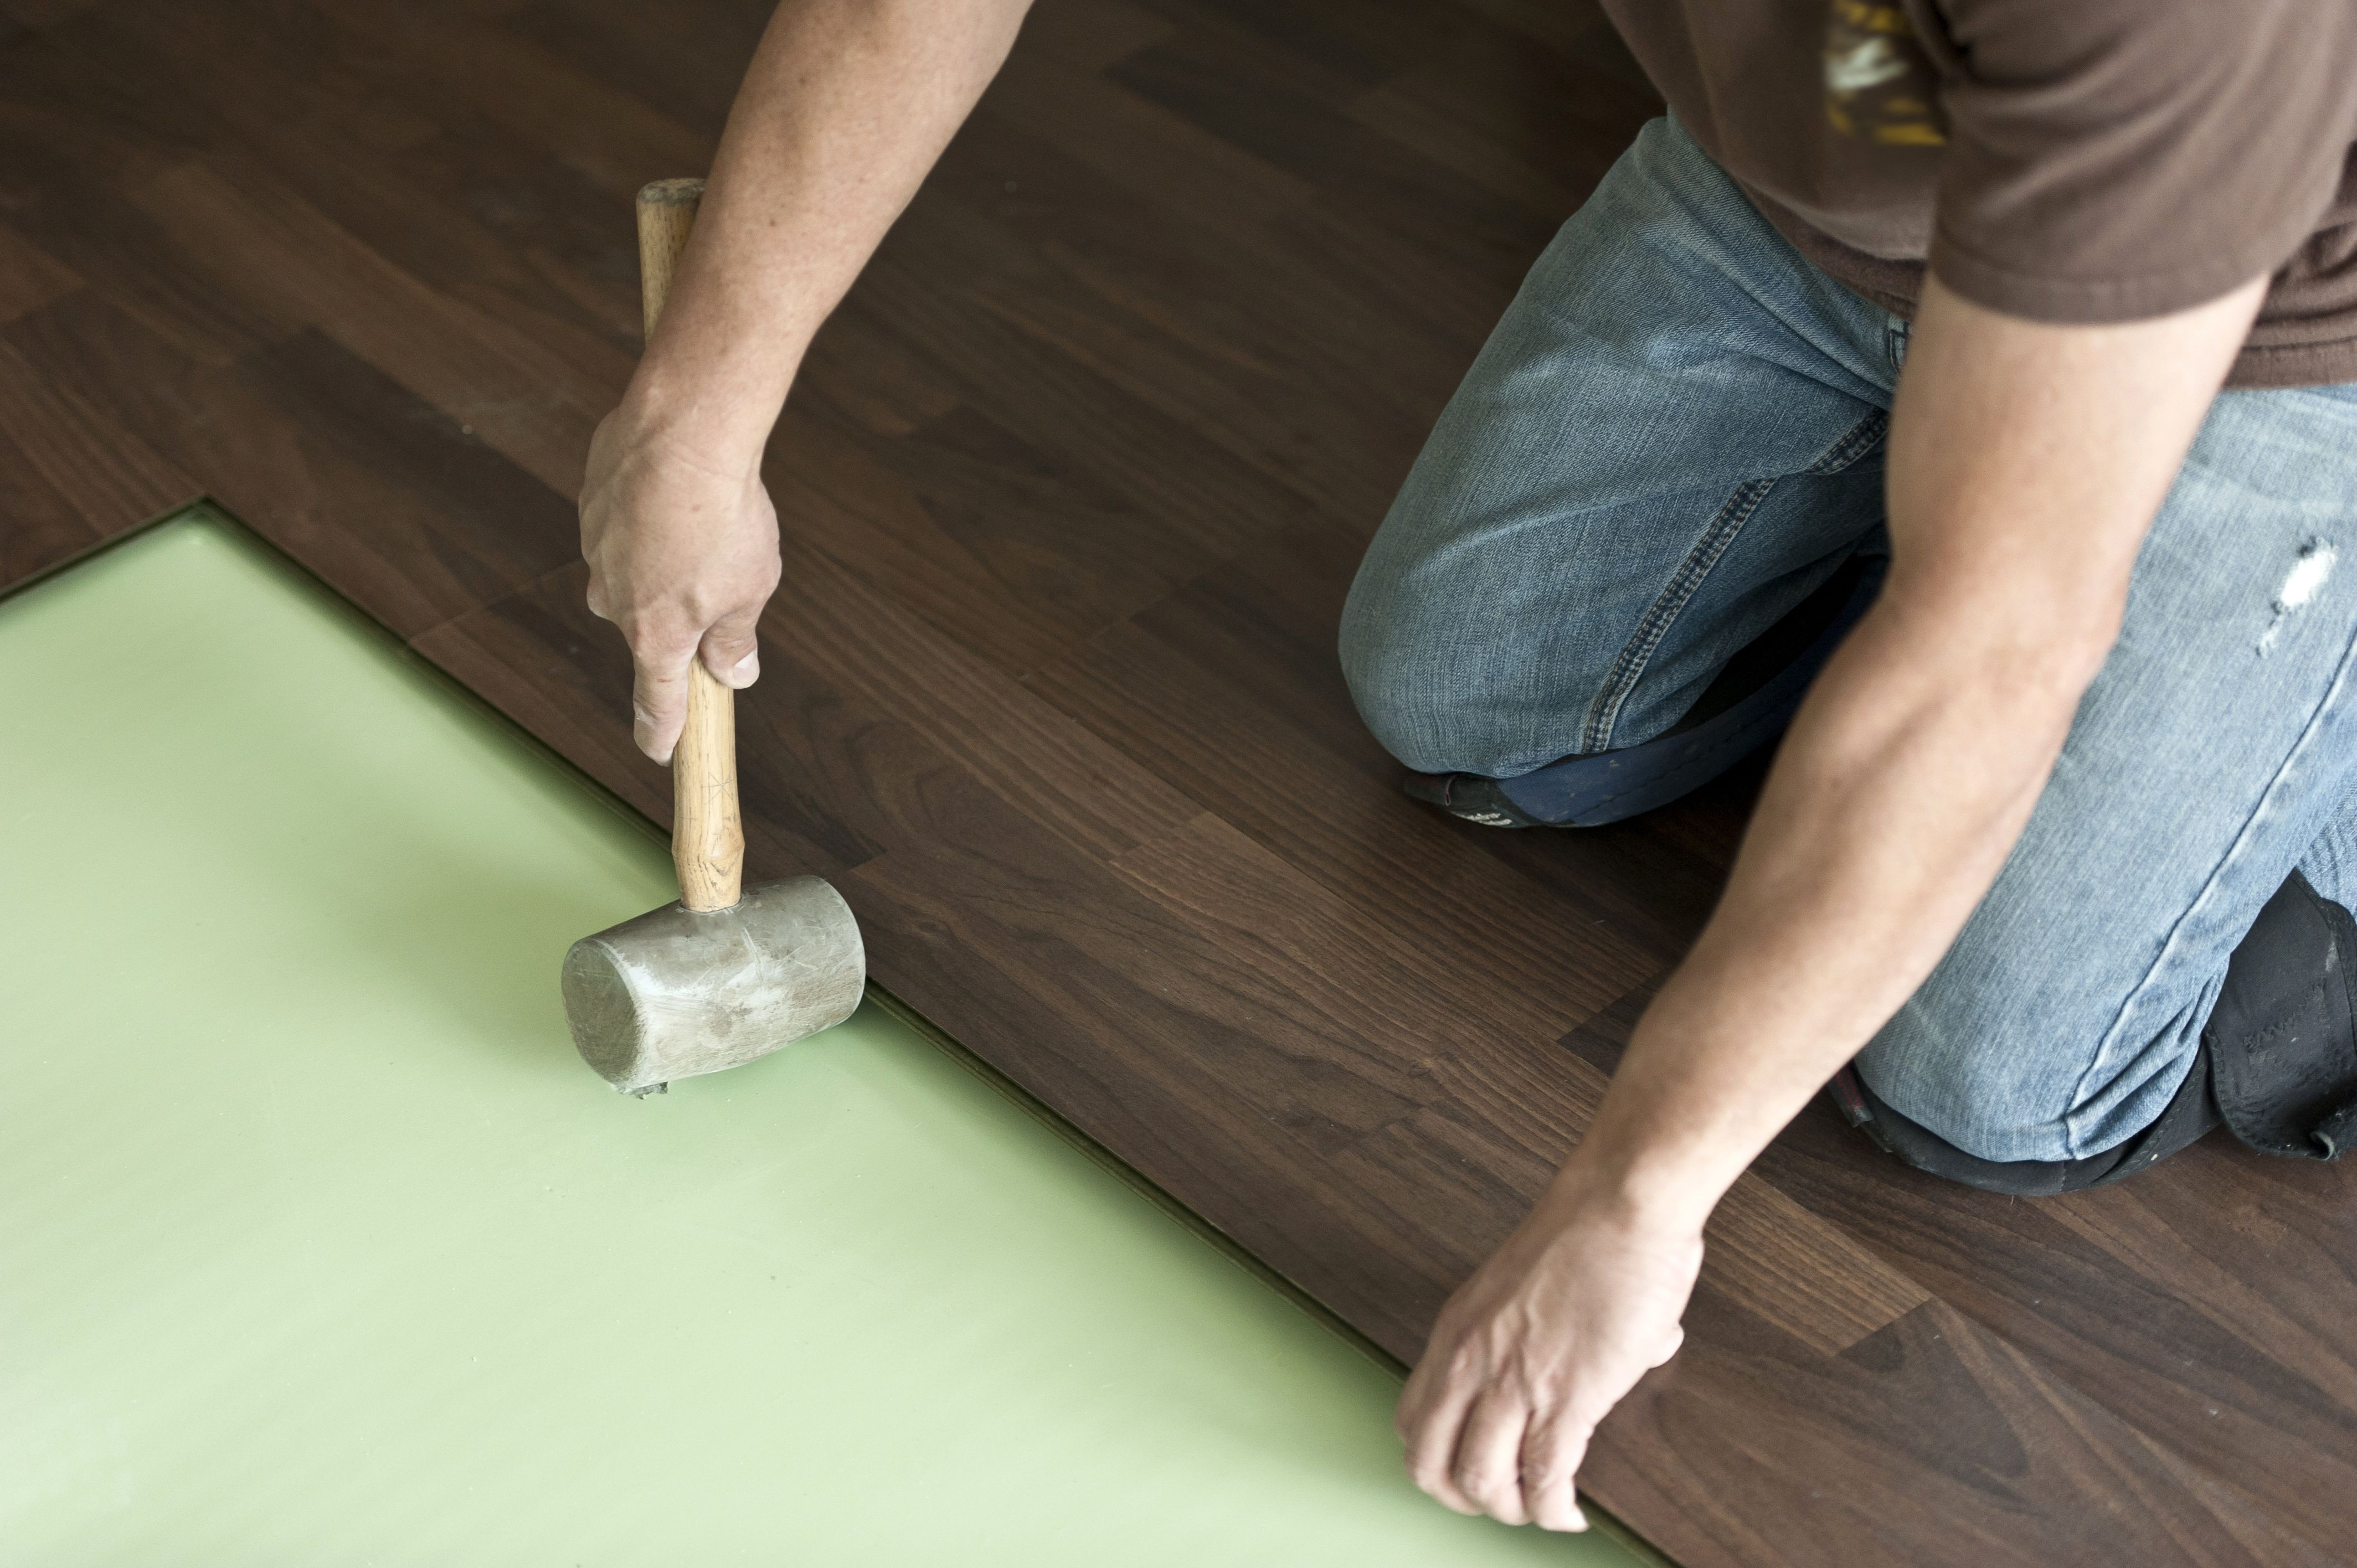 Hardwood Floor Estimate Sheet Of Can A Foam Pad Be Use Under solid Hardwood Flooring In Installing Hardwood Floor 155149312 57e967d45f9b586c35ade84a